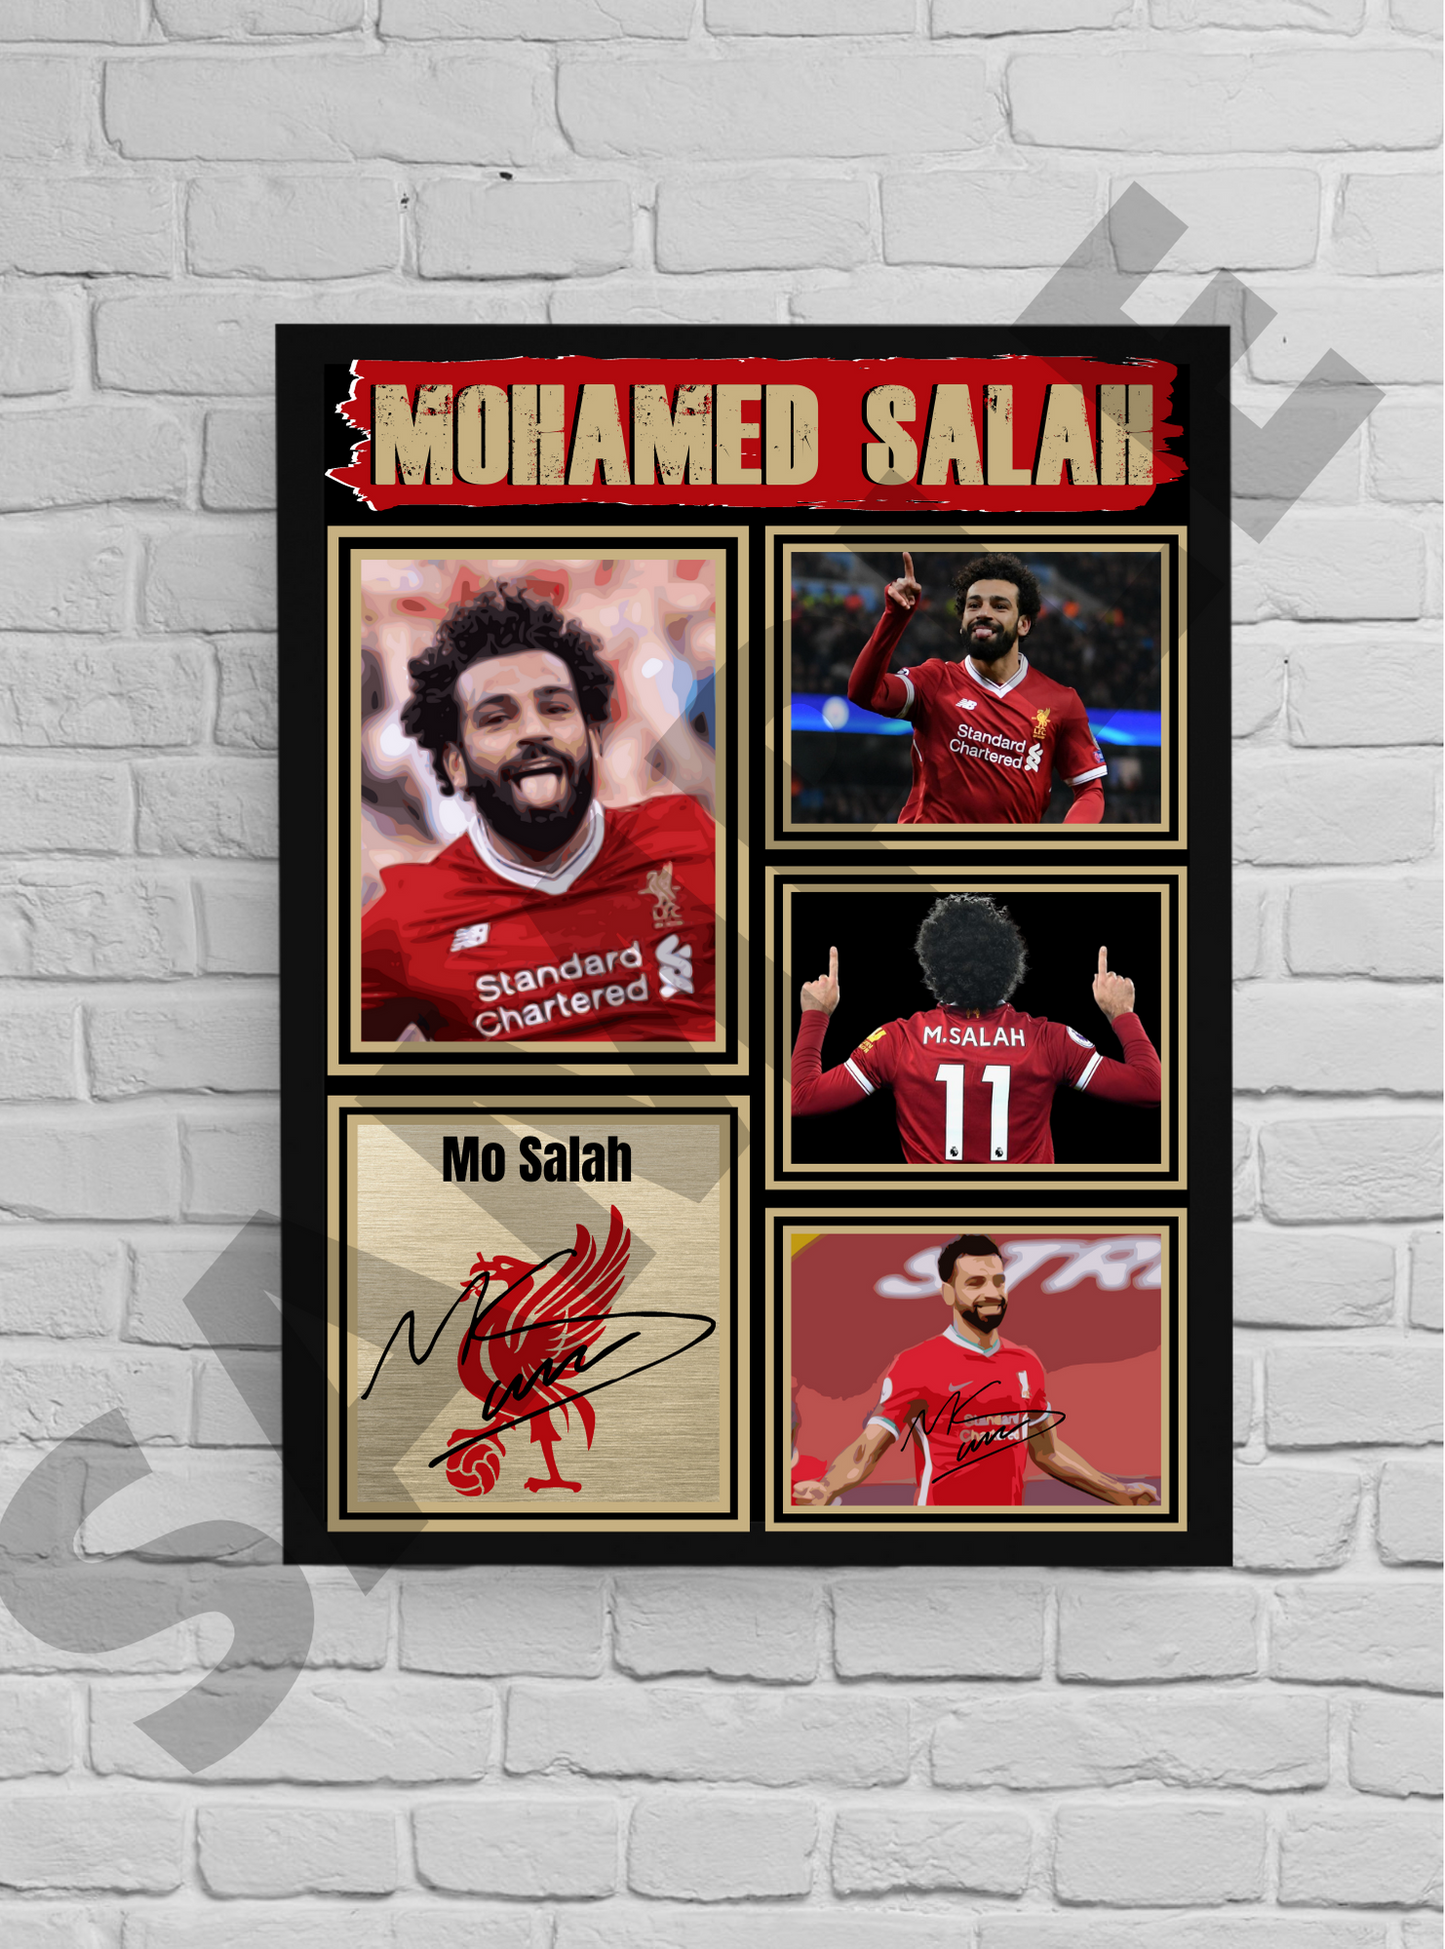 Mo Salah (Liverpool) #27 - Football Memorabilia/Collectible/Signed print